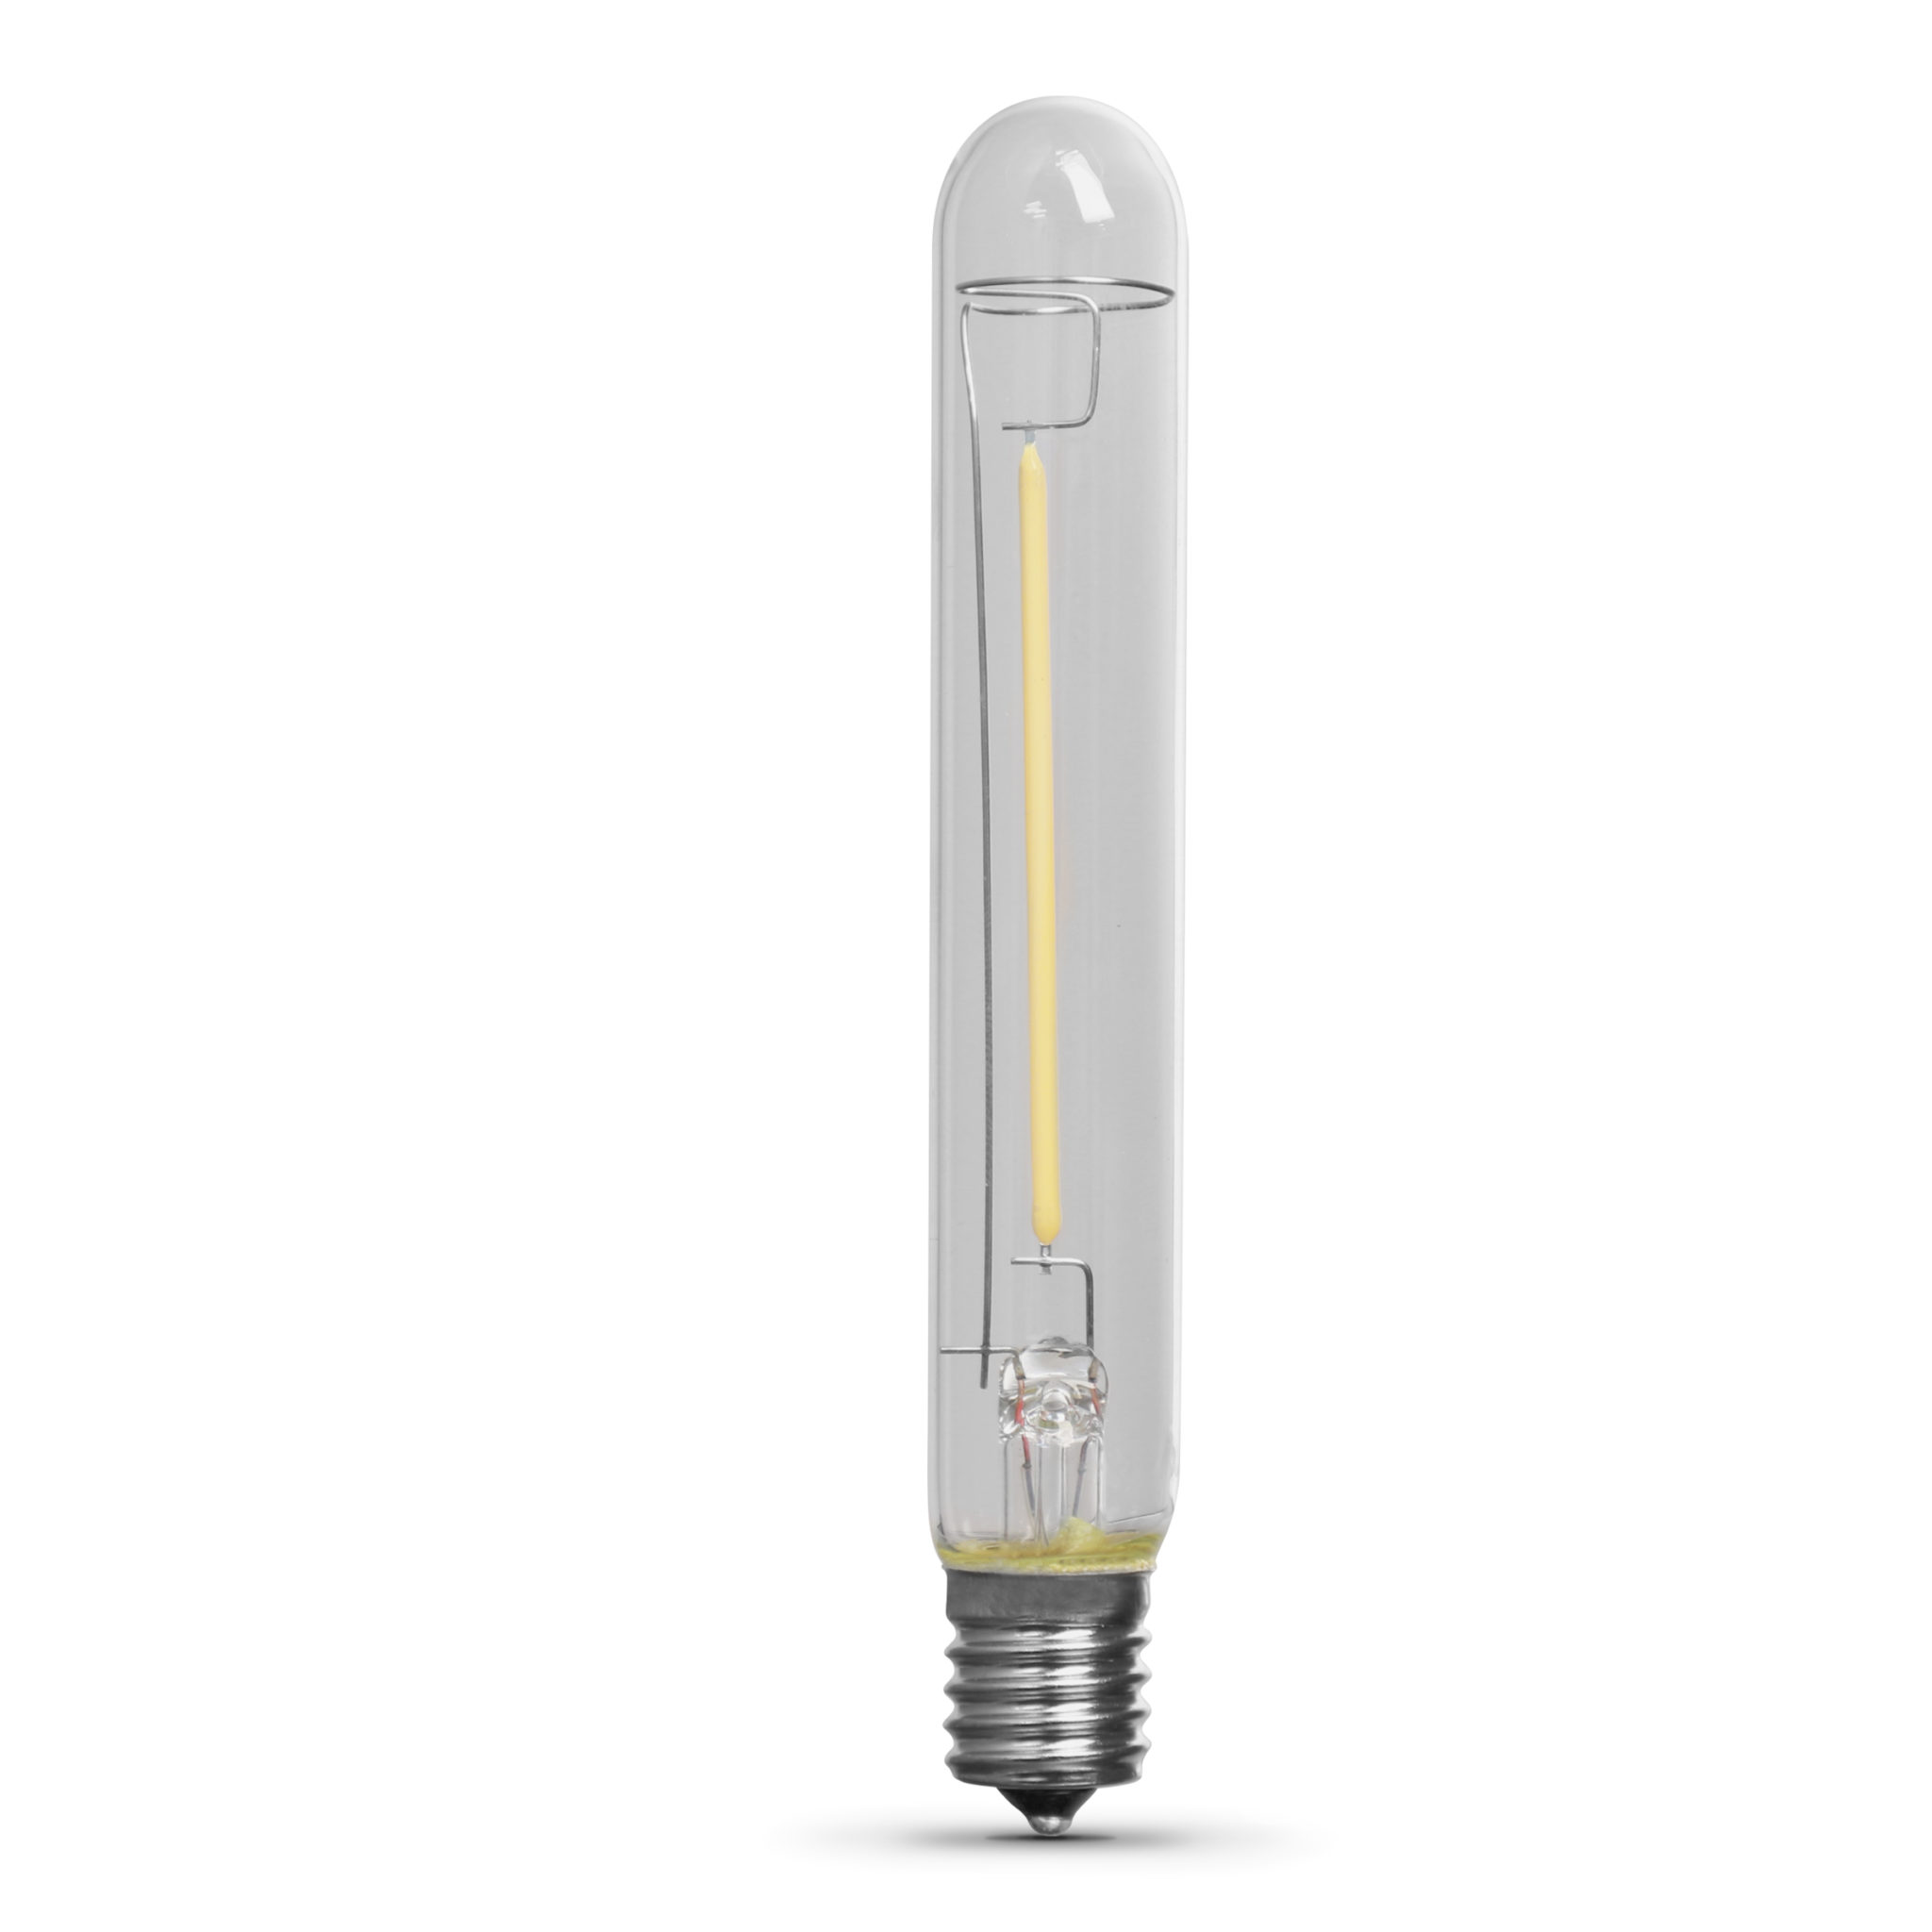 BP20T61/2/SU/LED LED Bulb, Linear, T6-1/2 Lamp, 20 W Equivalent, E17 Lamp Base, Warm White Light